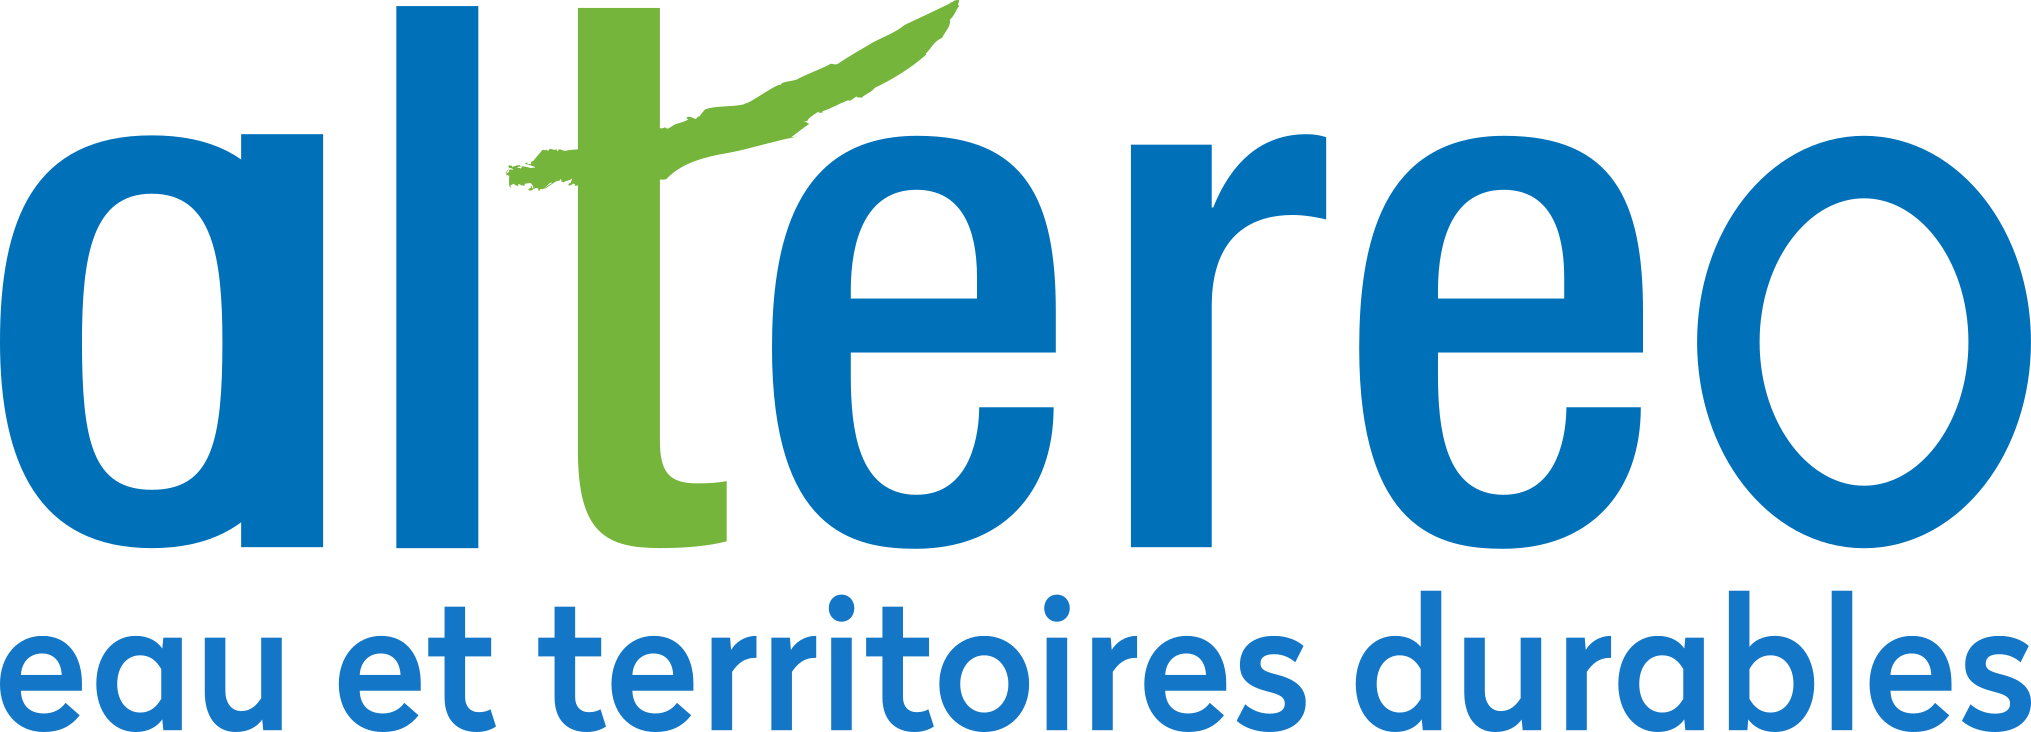 Altereo logo 2023 original - eau et territoires durables.png